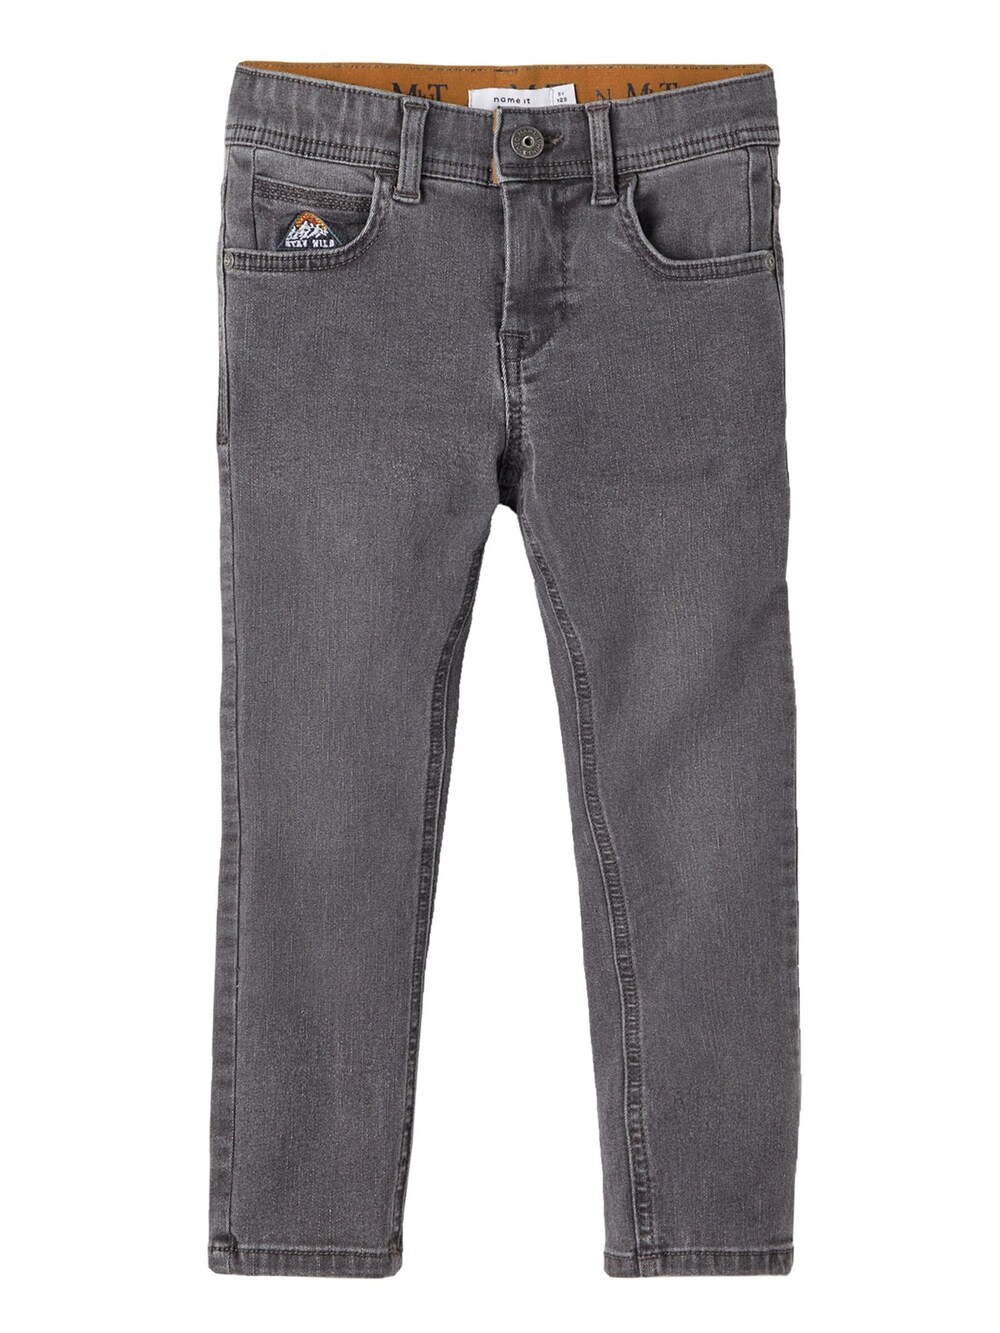 Обычные джинсы NAME IT, серый